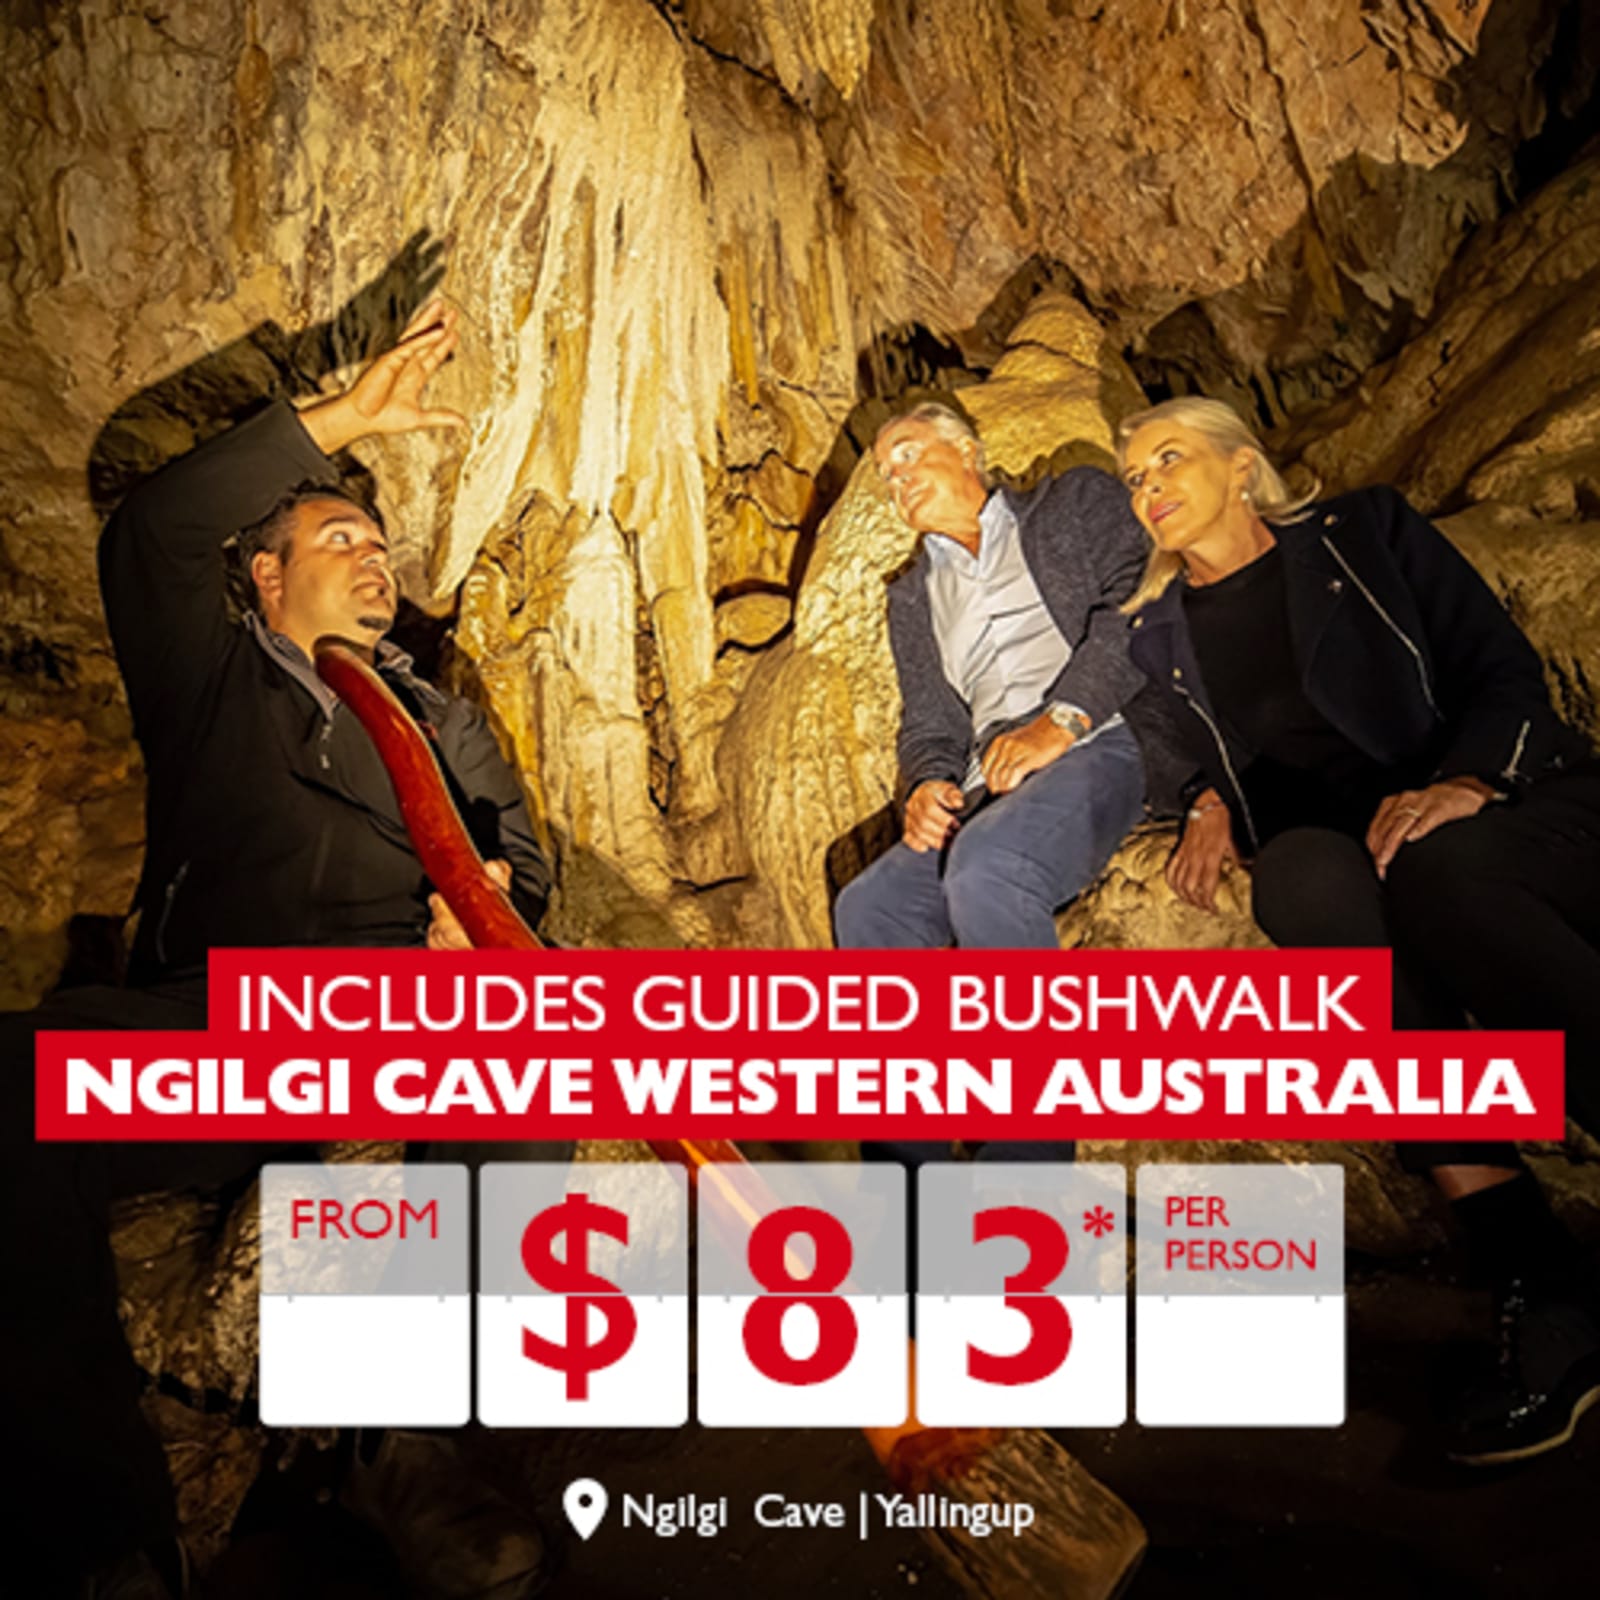 Includes guided bushwalk Ngilgi Cave Western Australia from $83* per person